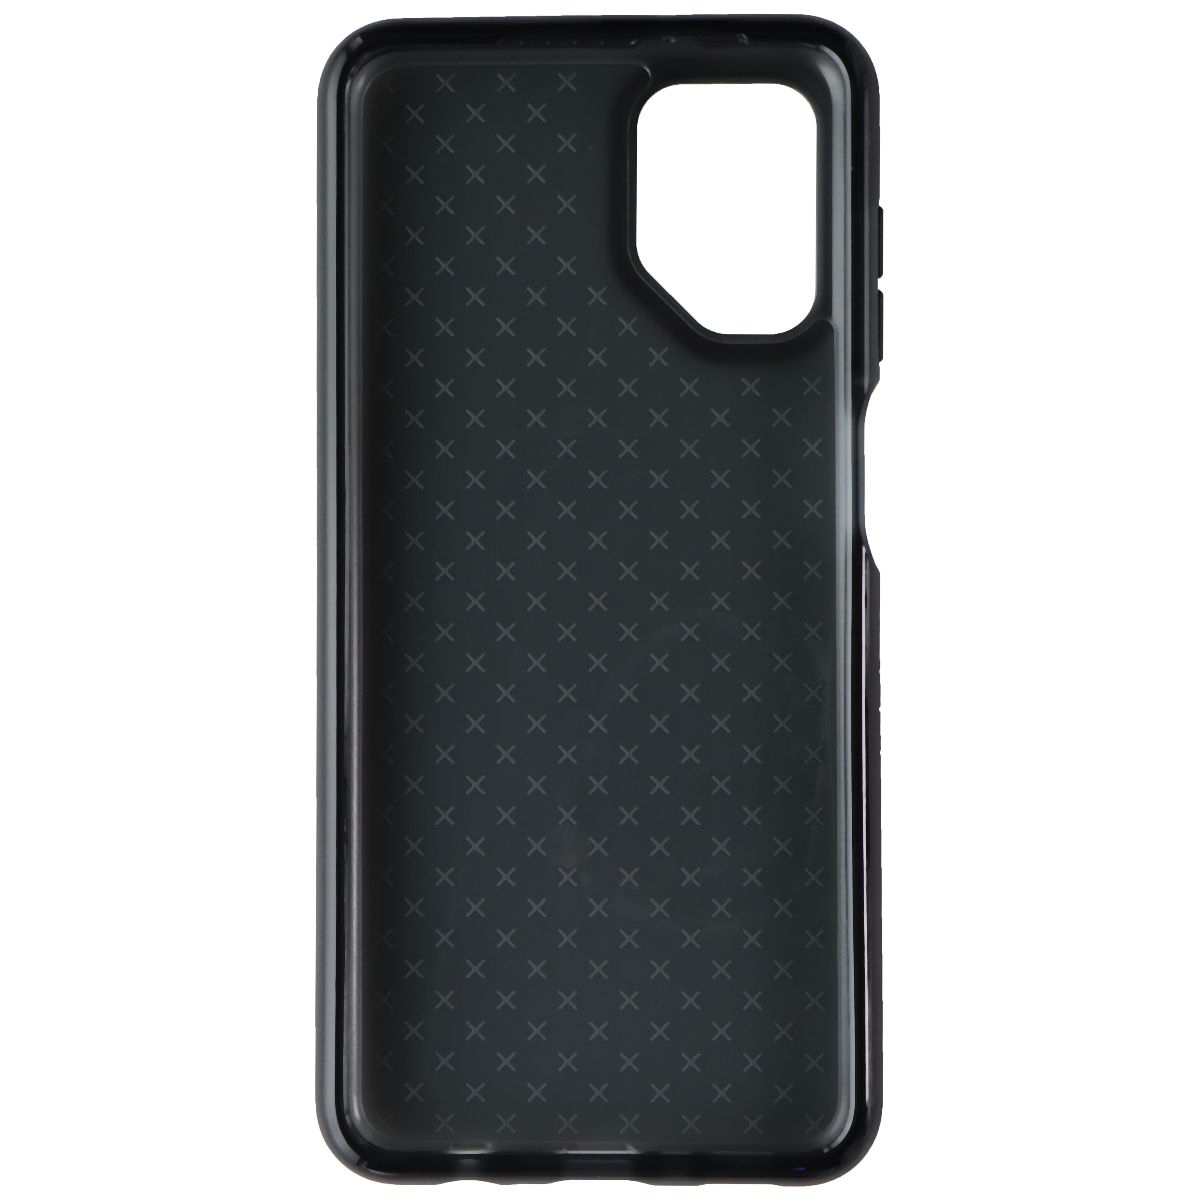 Tech21 Evo Check Series Case For Samsung Galaxy A12 - Black (Refurbished)